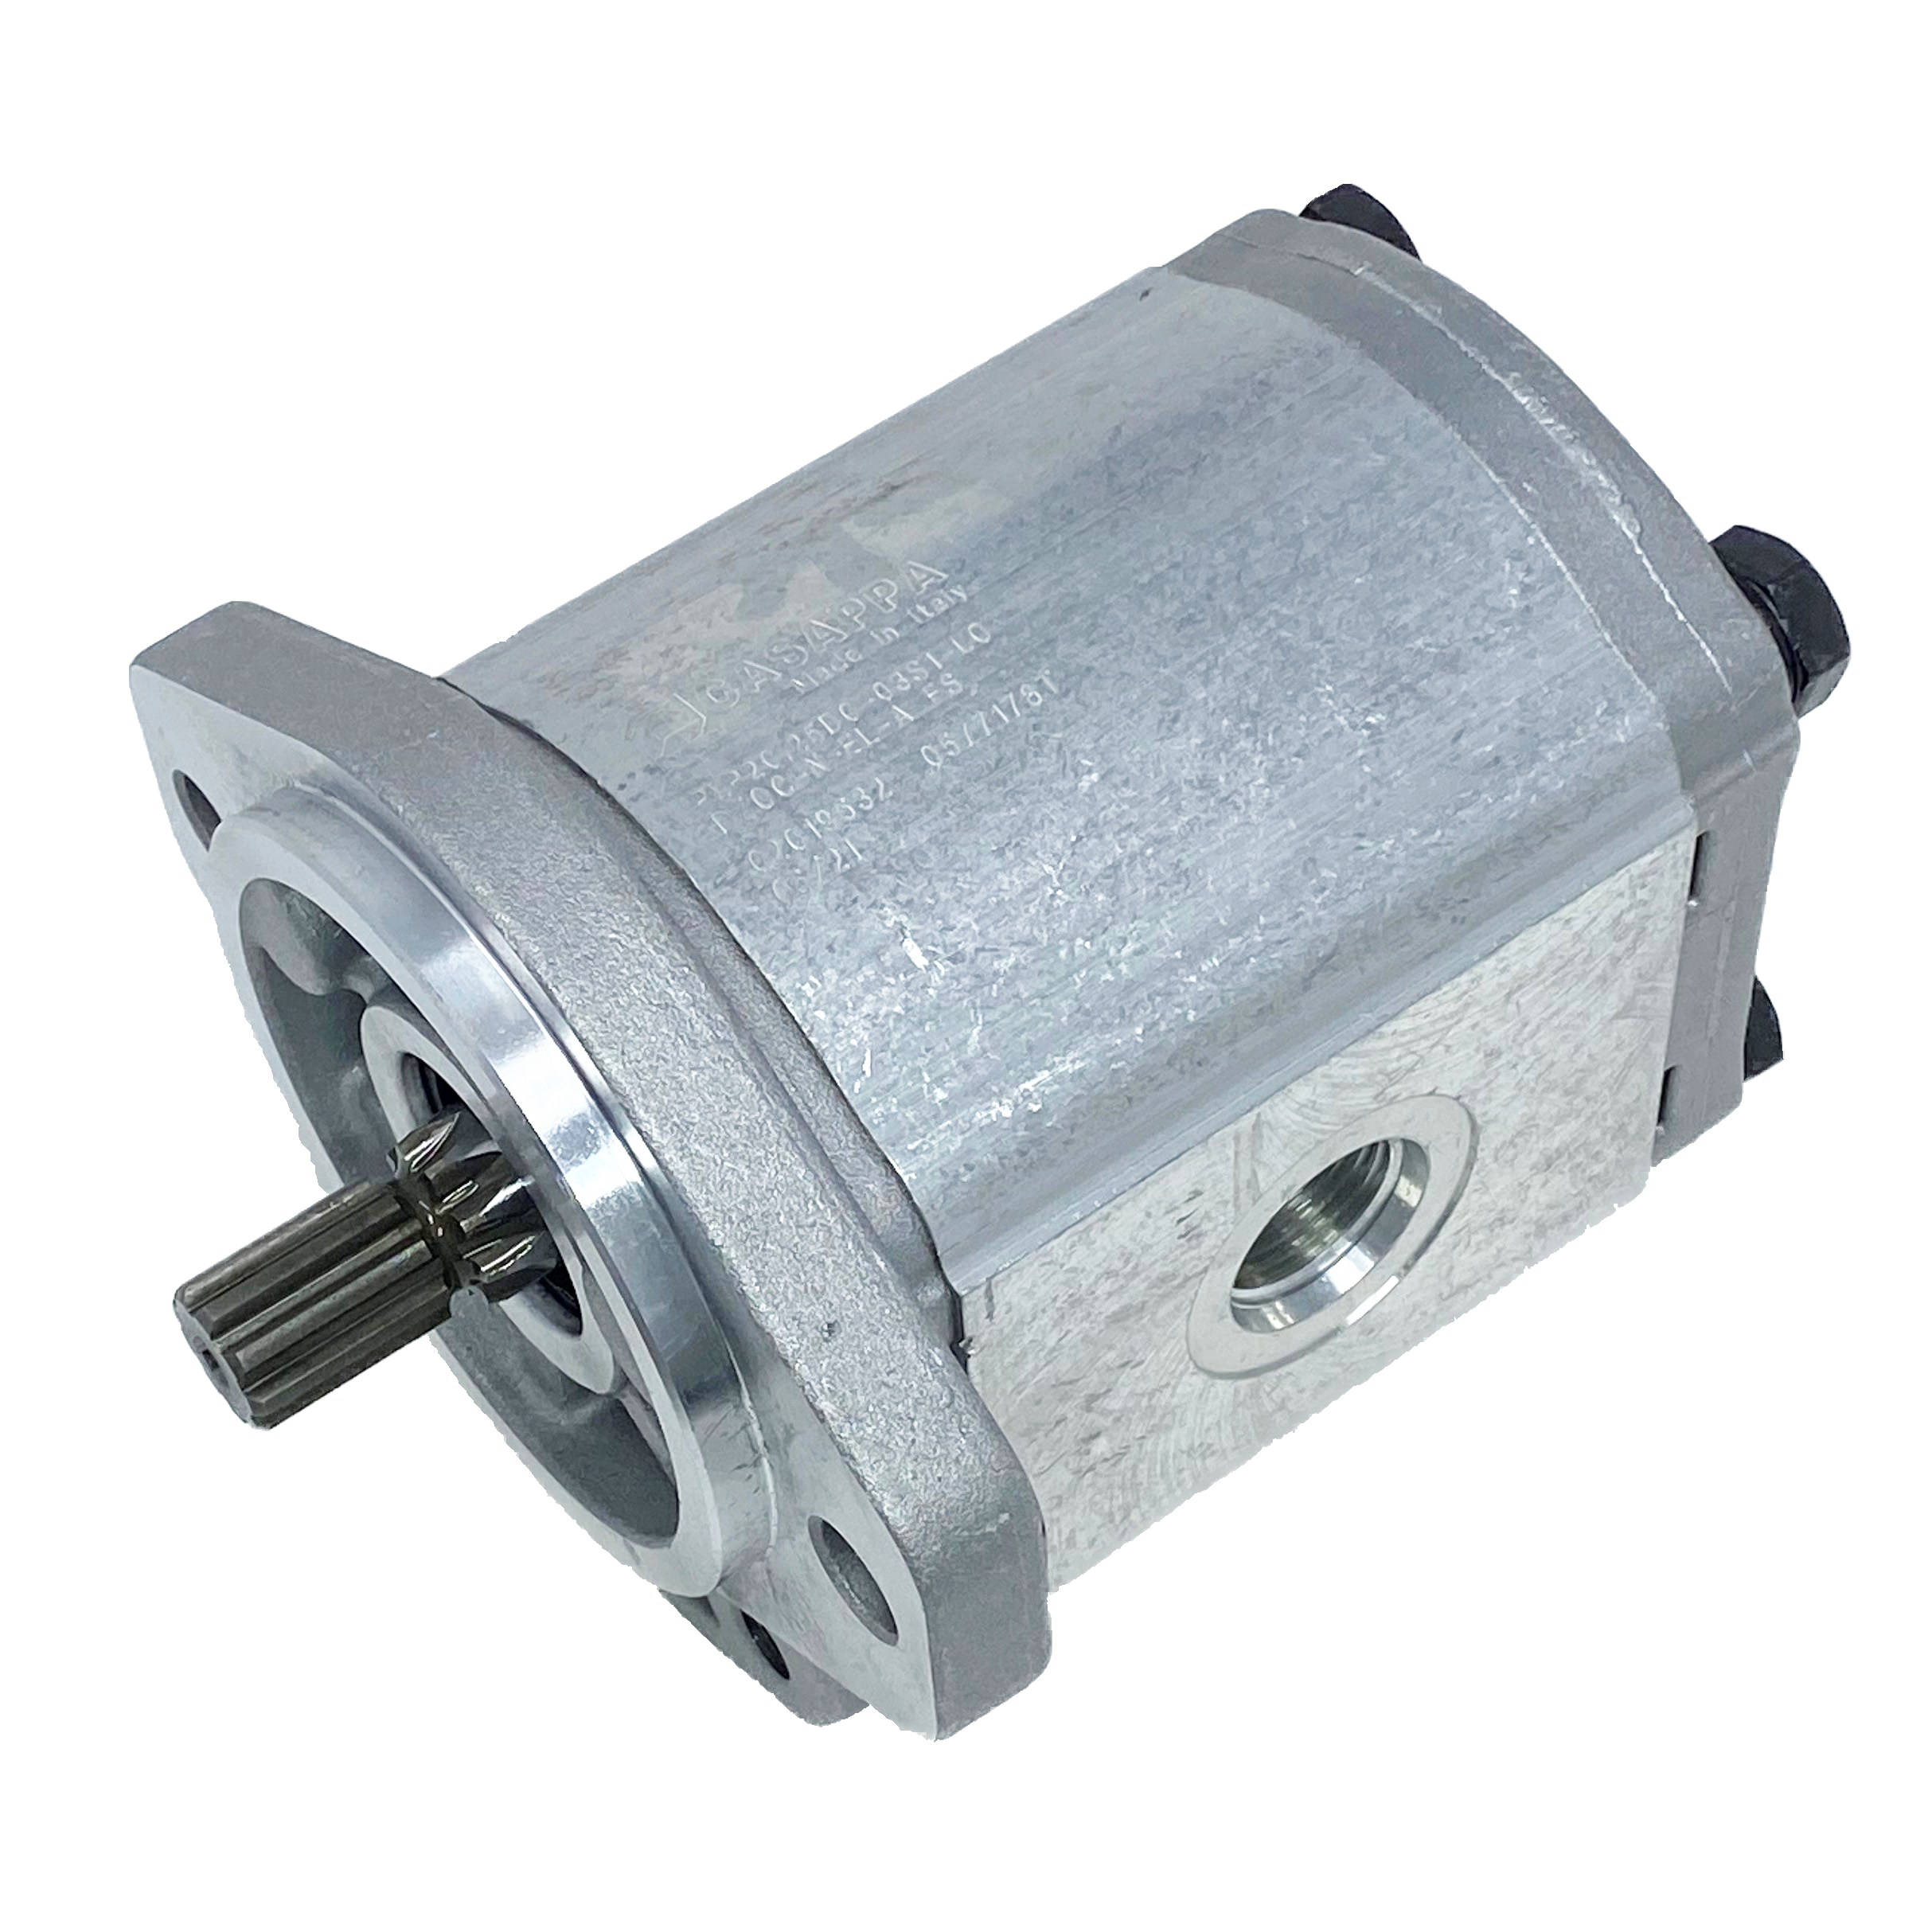 PHM20.31,5R0-03S9-LOC/OG-N-EL : Casappa Polaris Gear Motor, 33.03cc, 2900psi Rated, 2500RPM, Reversible Rear External Drain, 9T 16/32dp Shaft, SAE A 2-Bolt Flange, 0.625 (5/8") #10 SAE Inlet, 1.25" #20 SAE Outlet, Cast Iron Body, Aluminum Flange